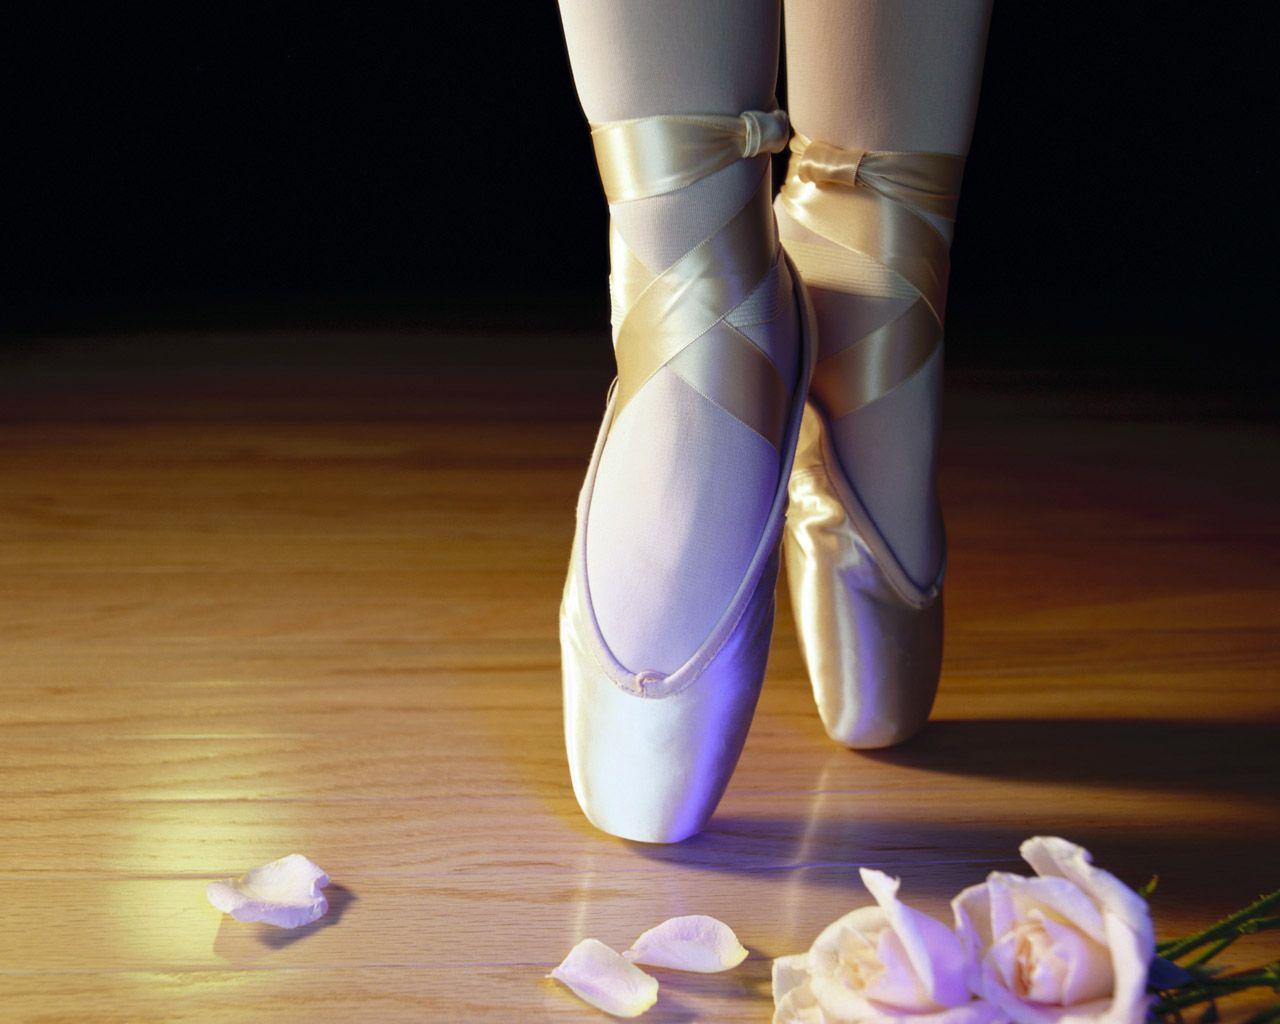 Dance Wallpaper Ballet (Picture)